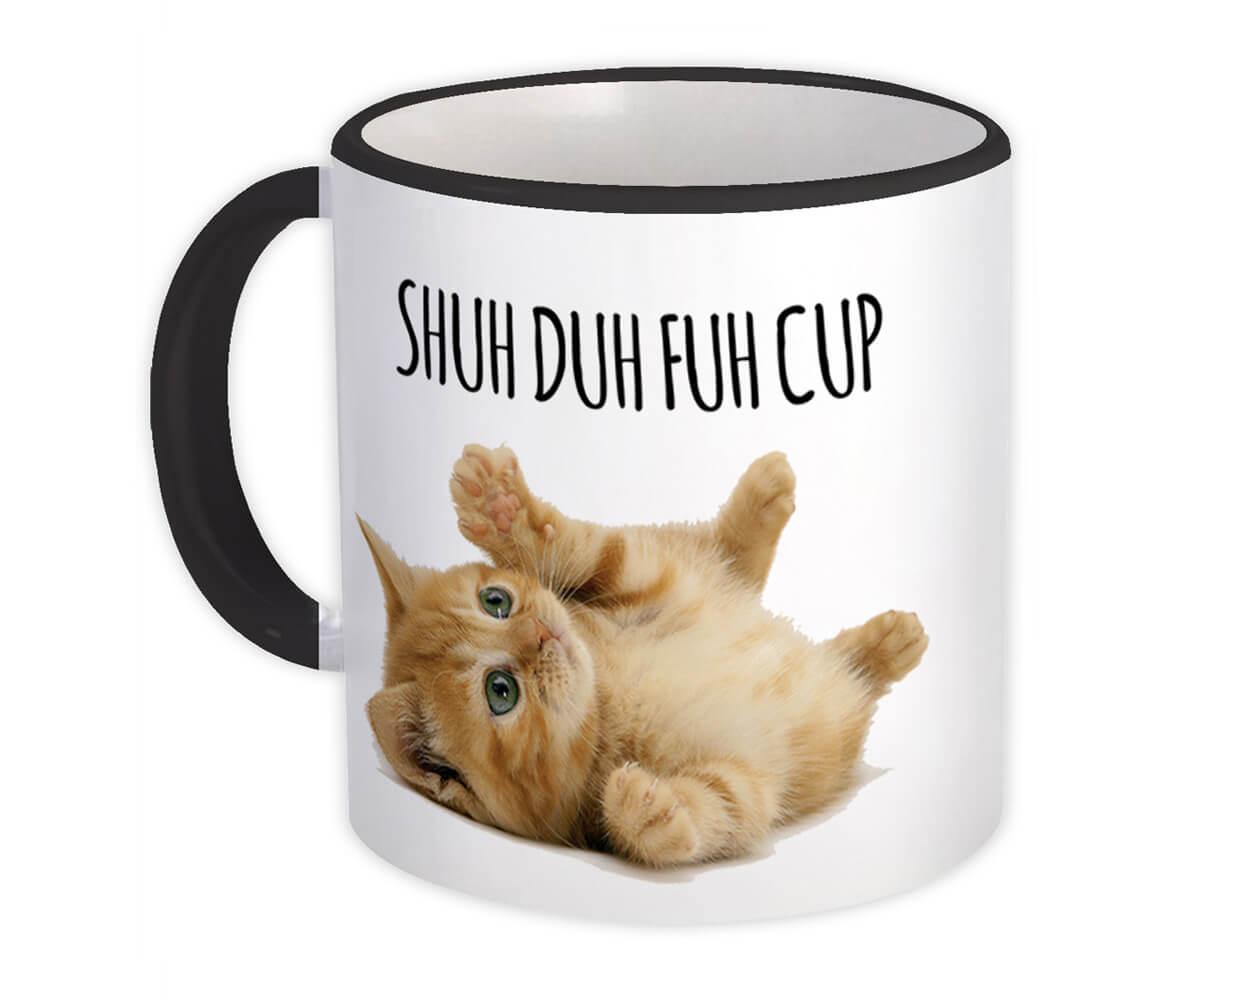 Mug Cute Kitten Funny Office Coworker Gift Cat Shuh Duh Fuh Cup 